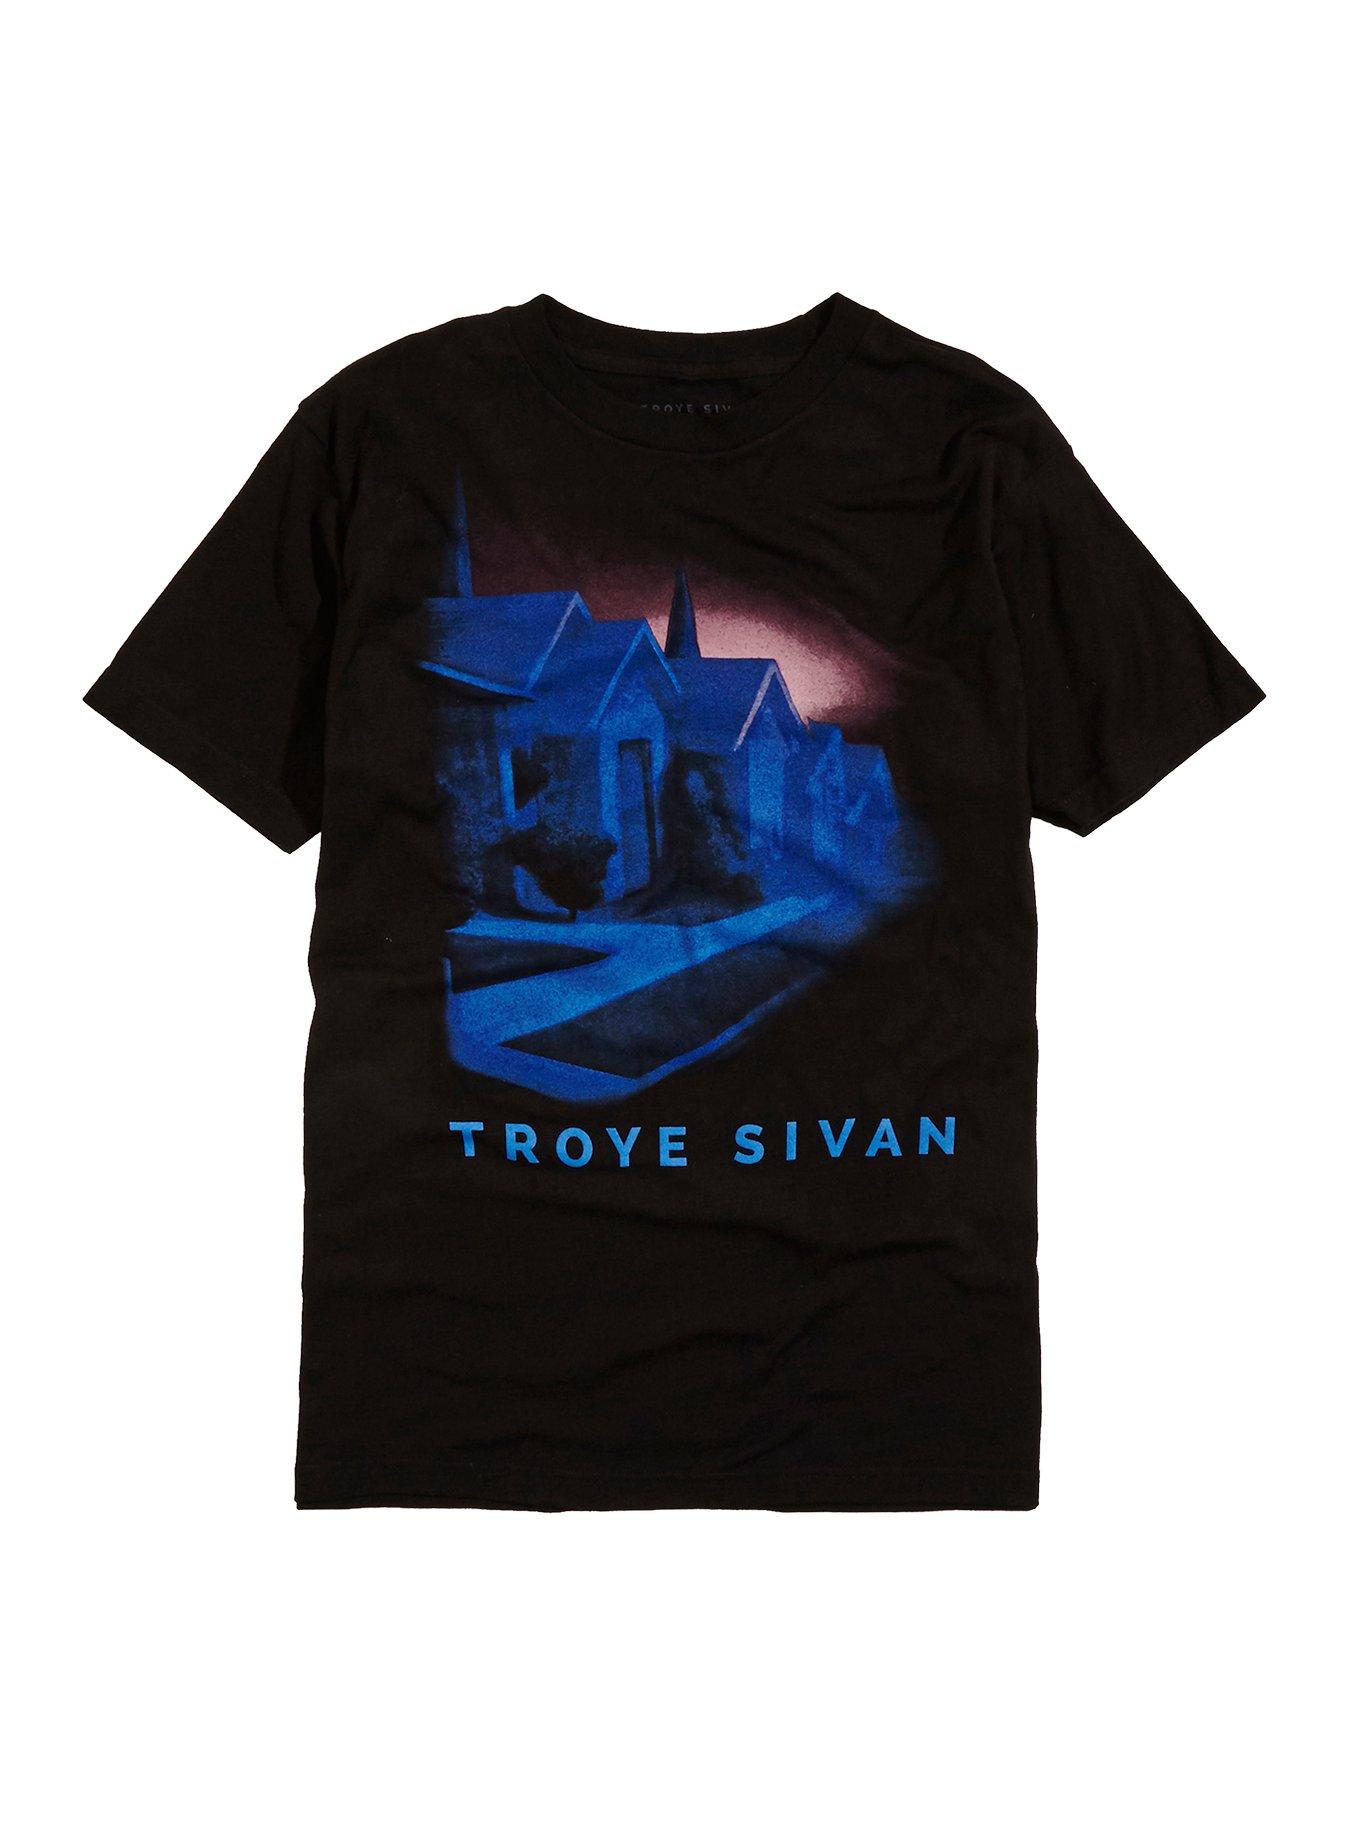 Troye Sivan Blue Neighbourhood T-Shirt, BLACK, hi-res